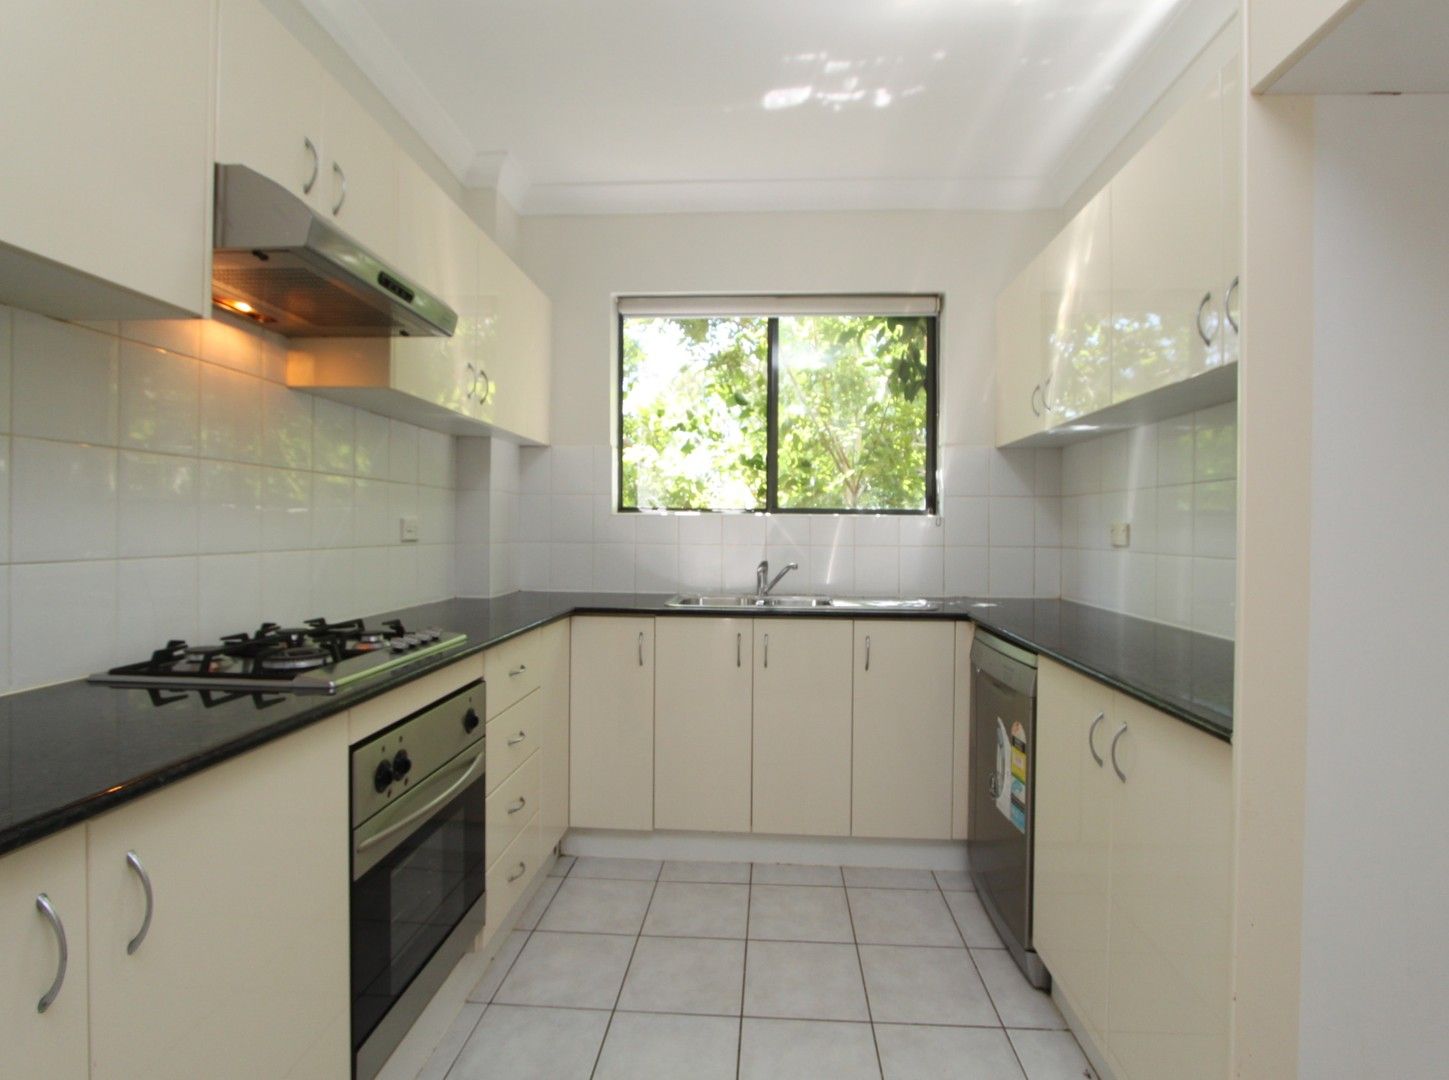 2 bedrooms Apartment / Unit / Flat in 11/6-7 Rena SOUTH HURSTVILLE NSW, 2221